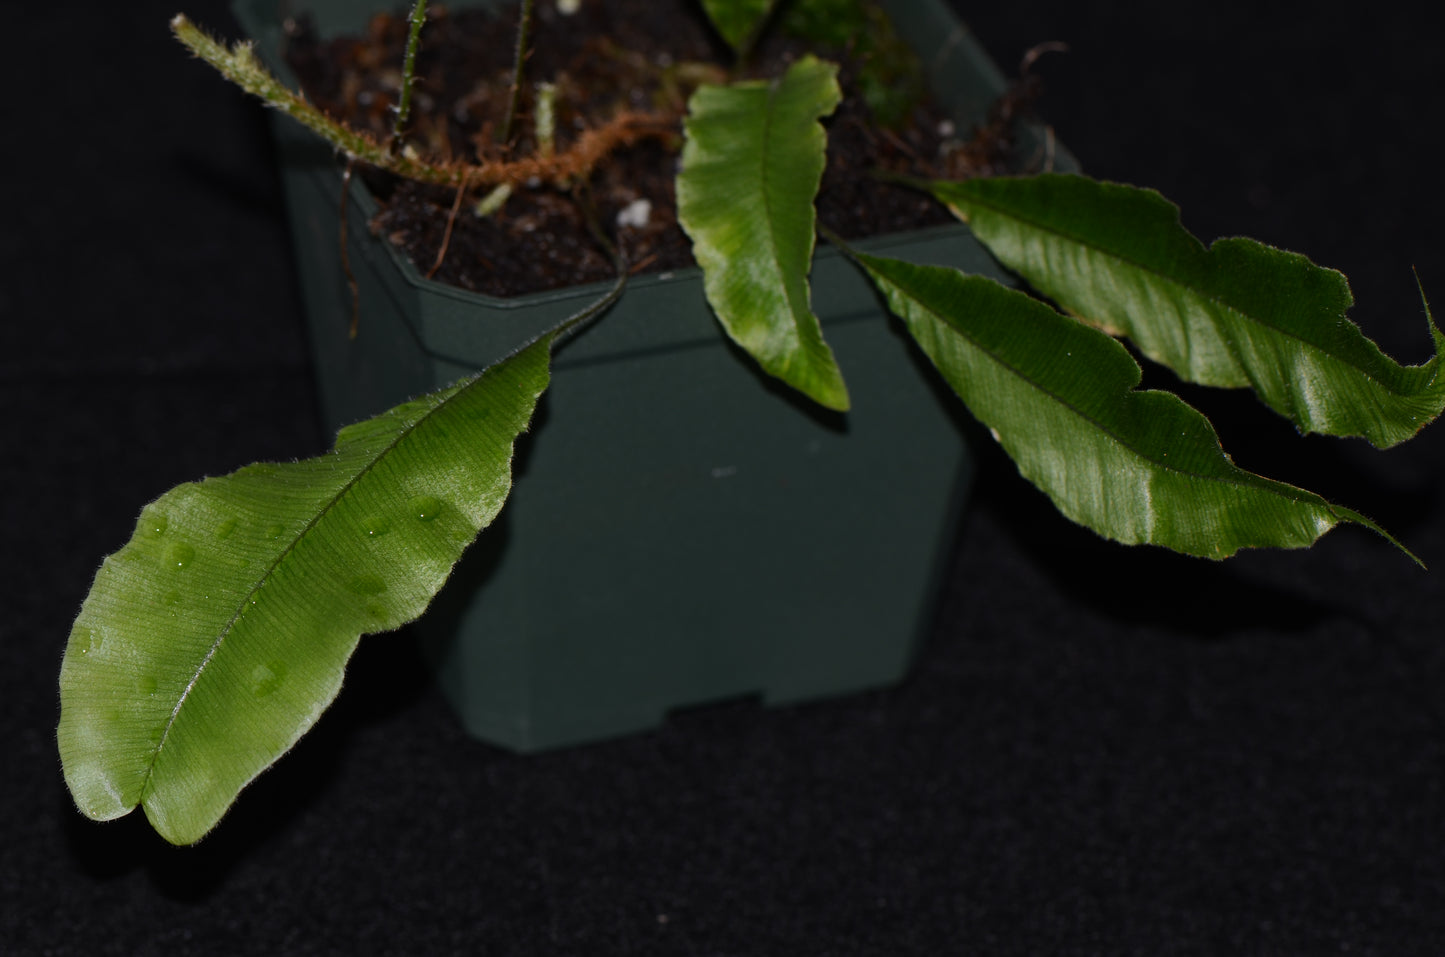 Oleandra sp. #1 "Ecuador"